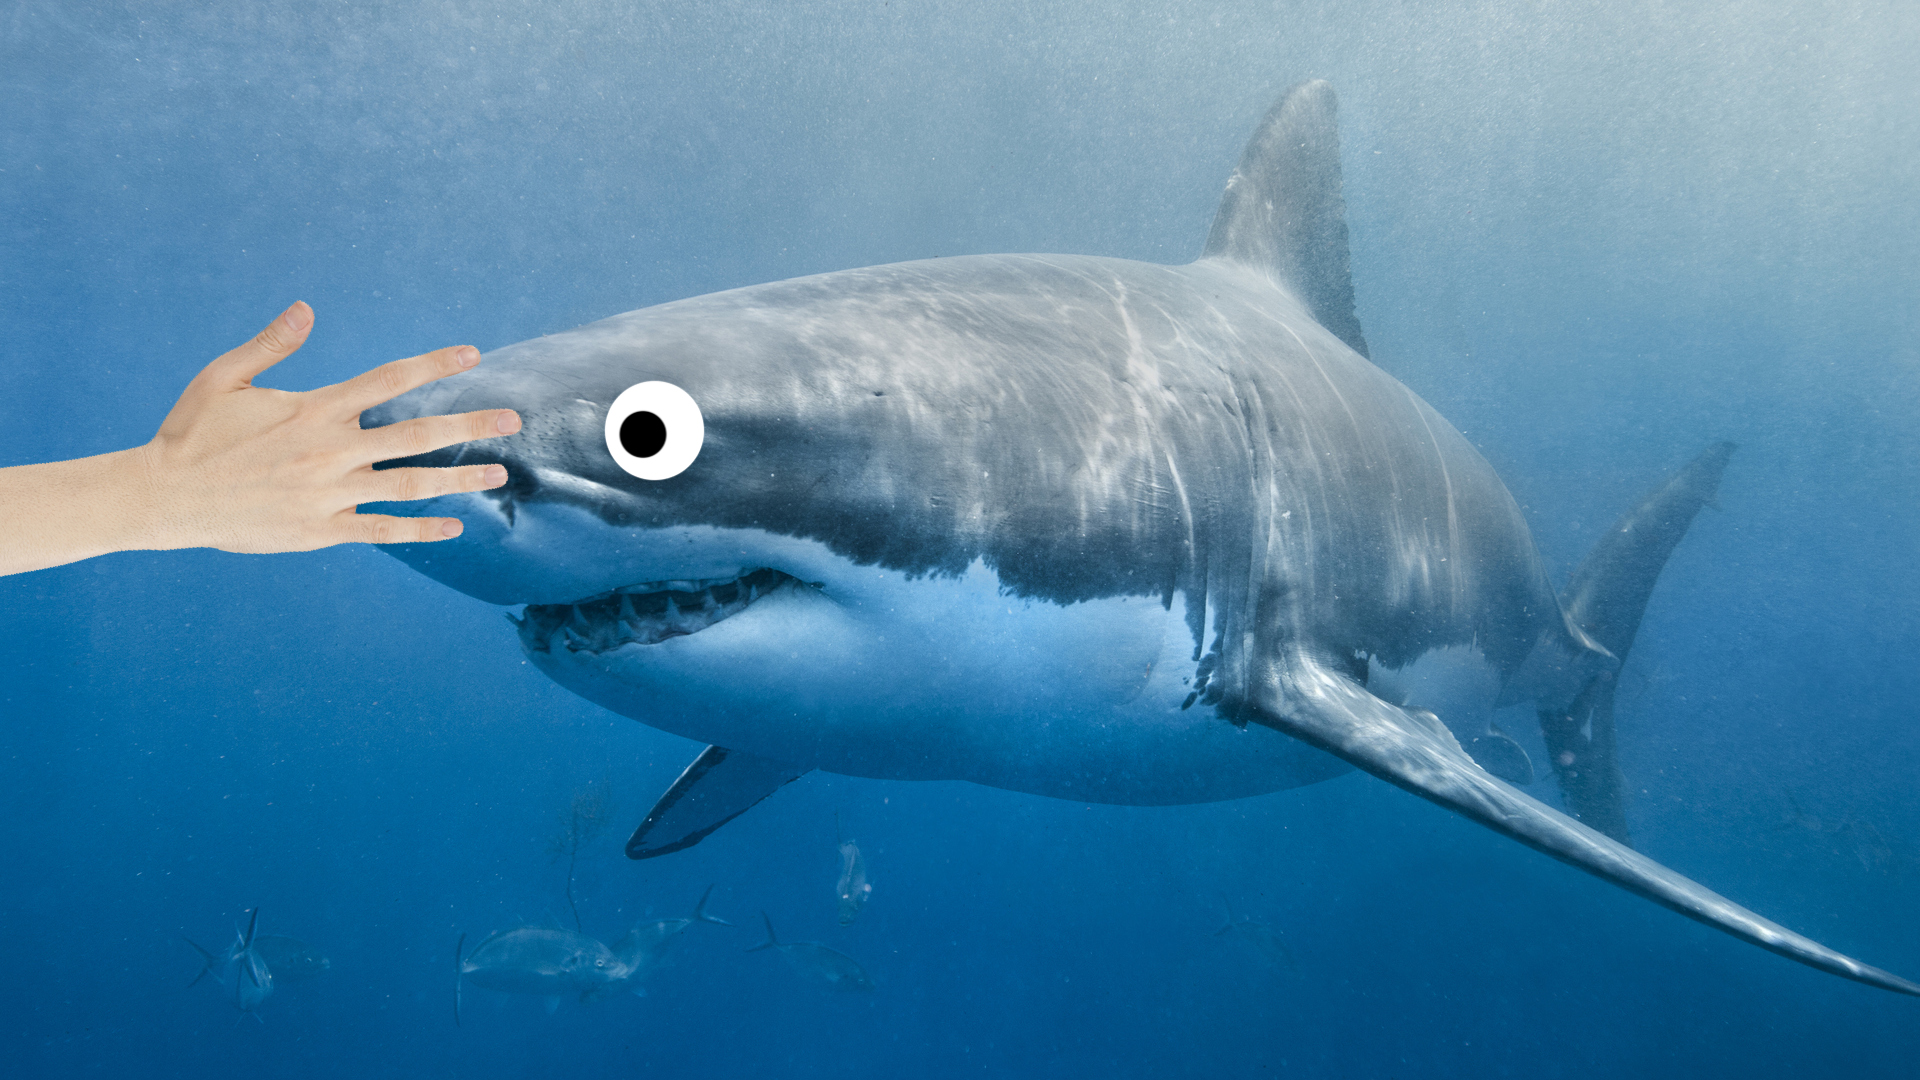 A human hand touching the head of a shark